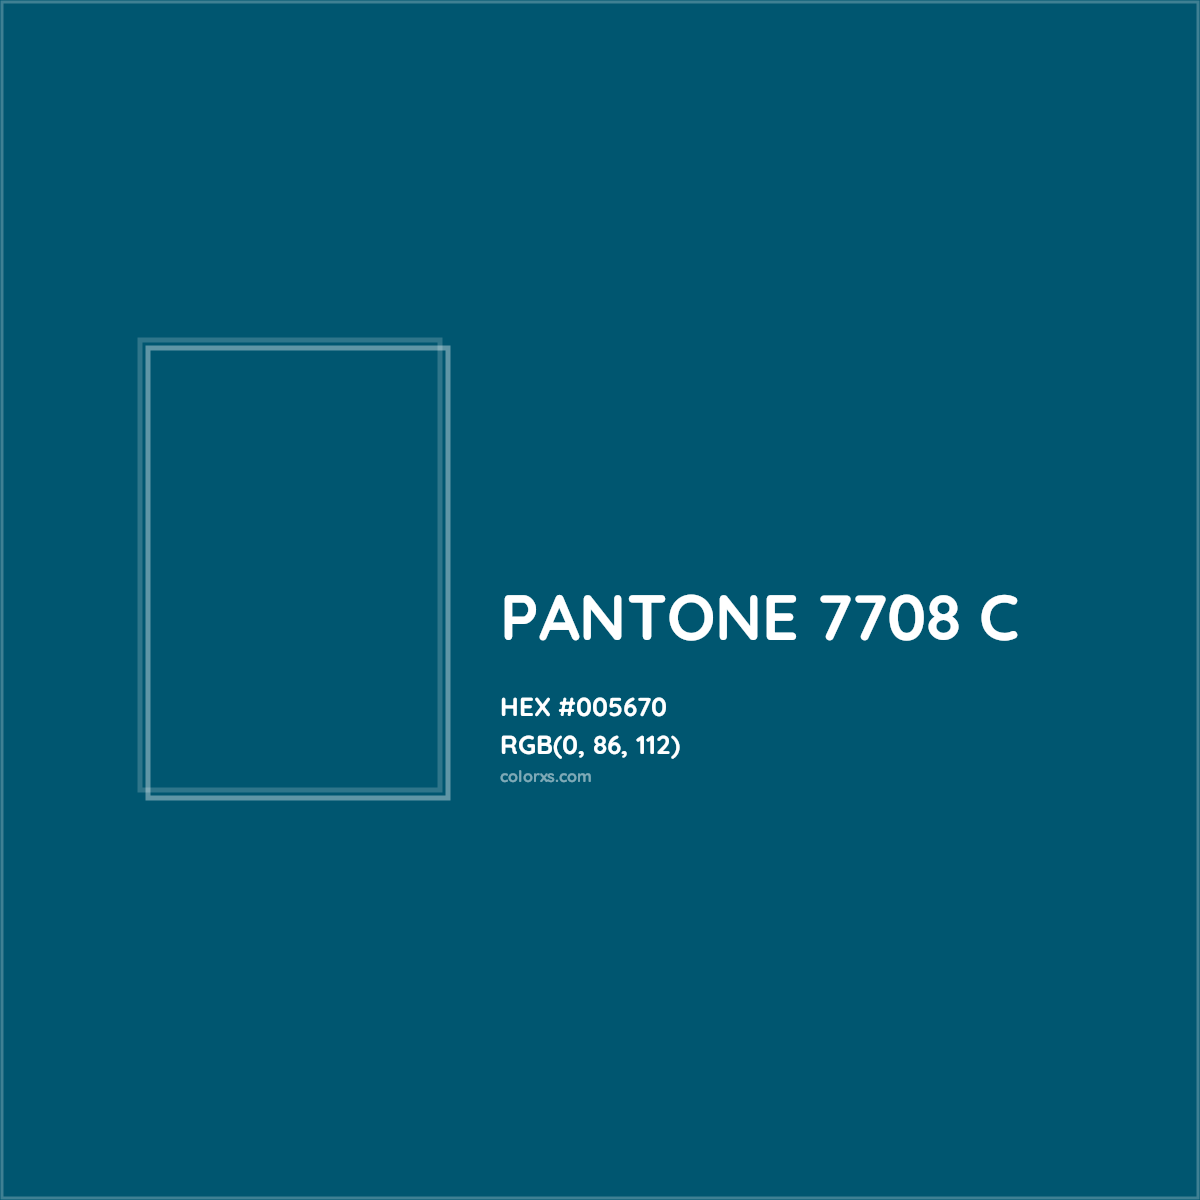 HEX #005670 PANTONE 7708 C CMS Pantone PMS - Color Code